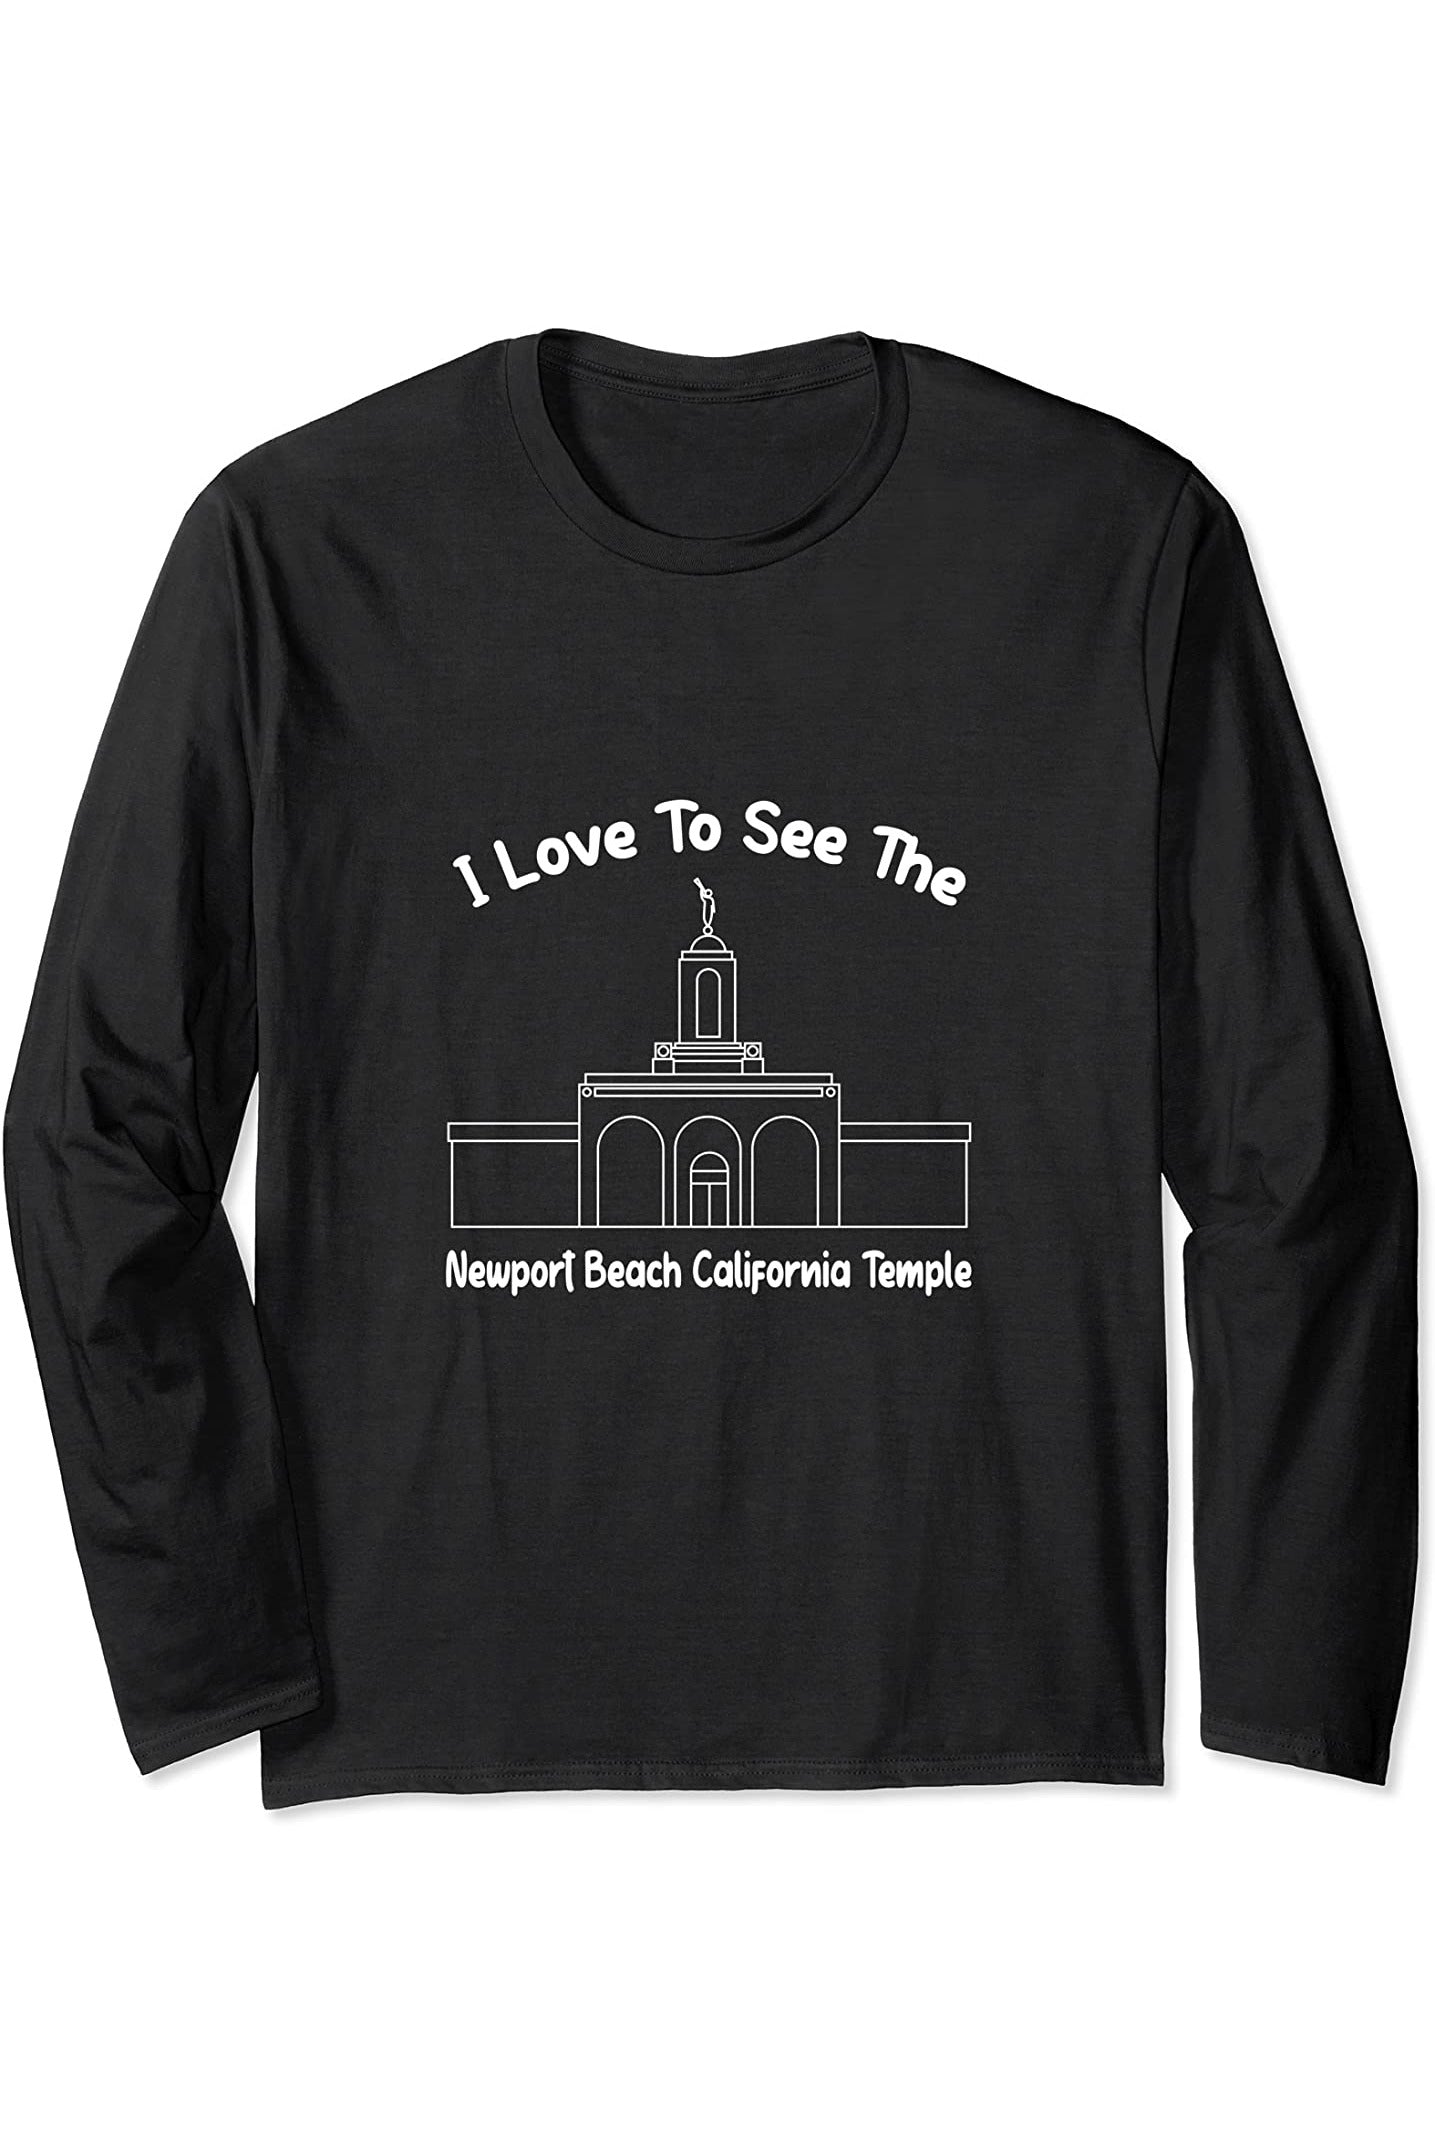 Newport Beach California Temple Long Sleeve T-Shirt - Primary Style (English) US